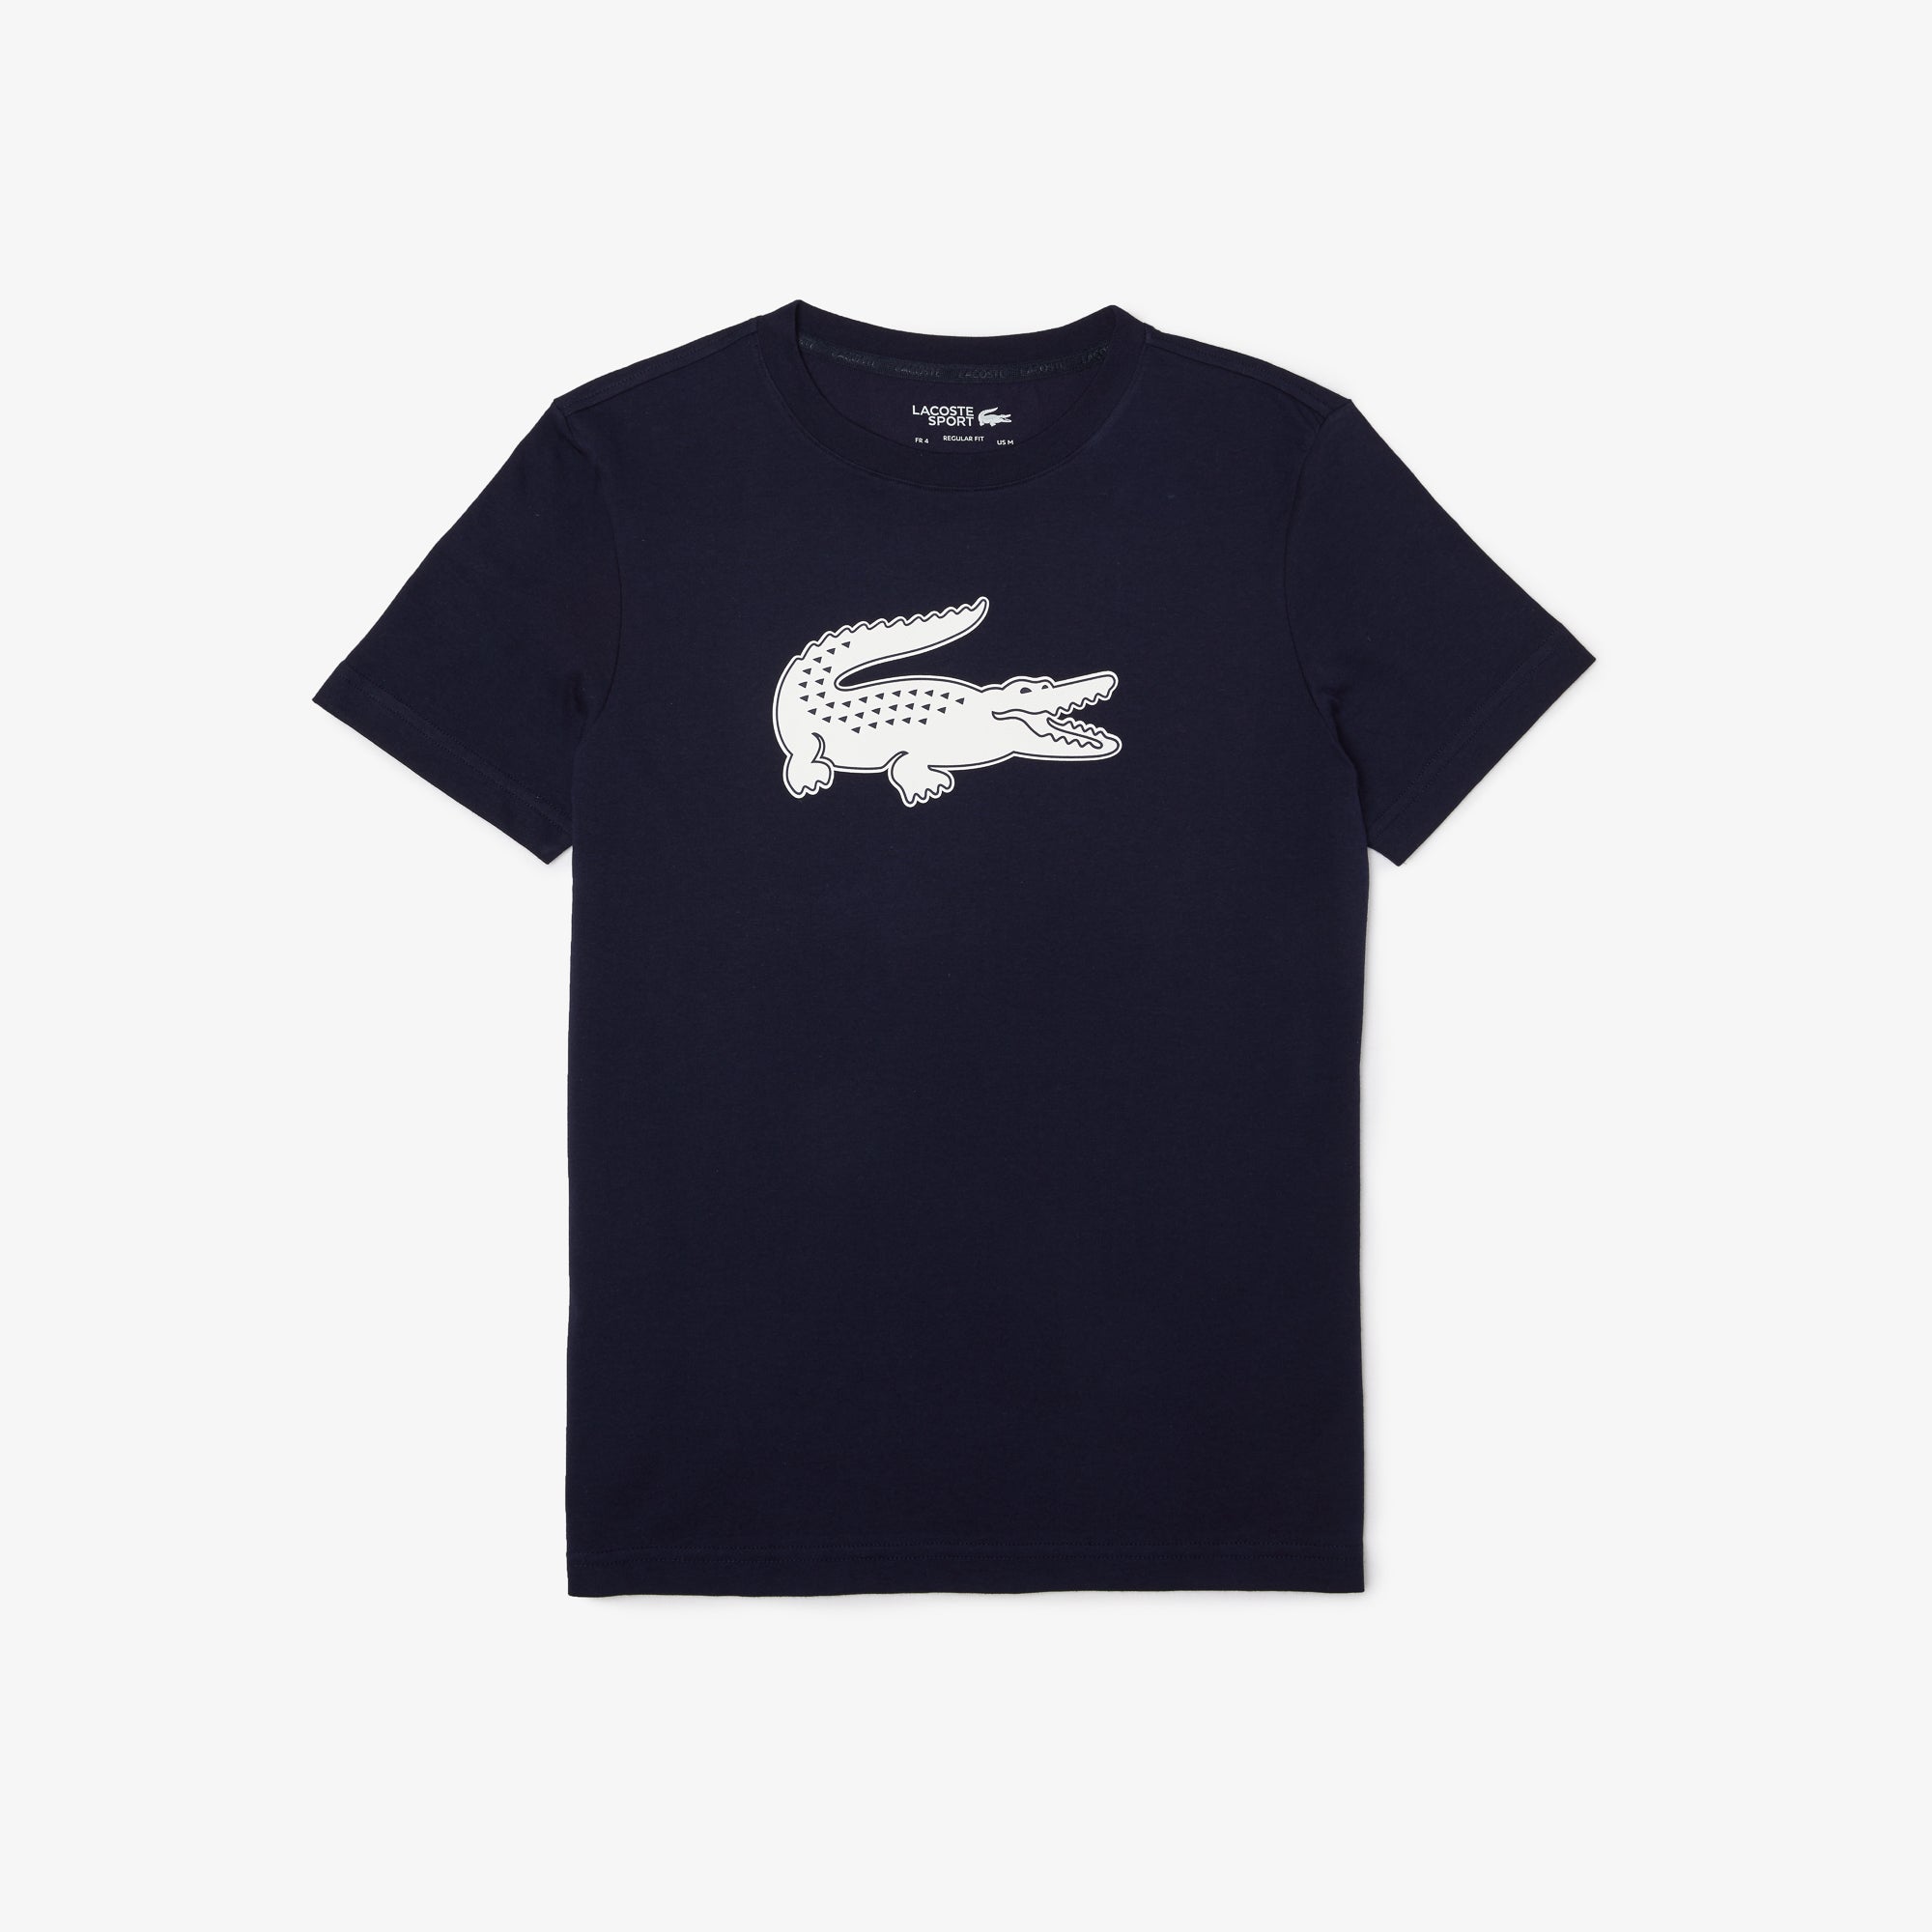 Se Lacoste T-shirt (Navy Blue/White) - M hos Padellife